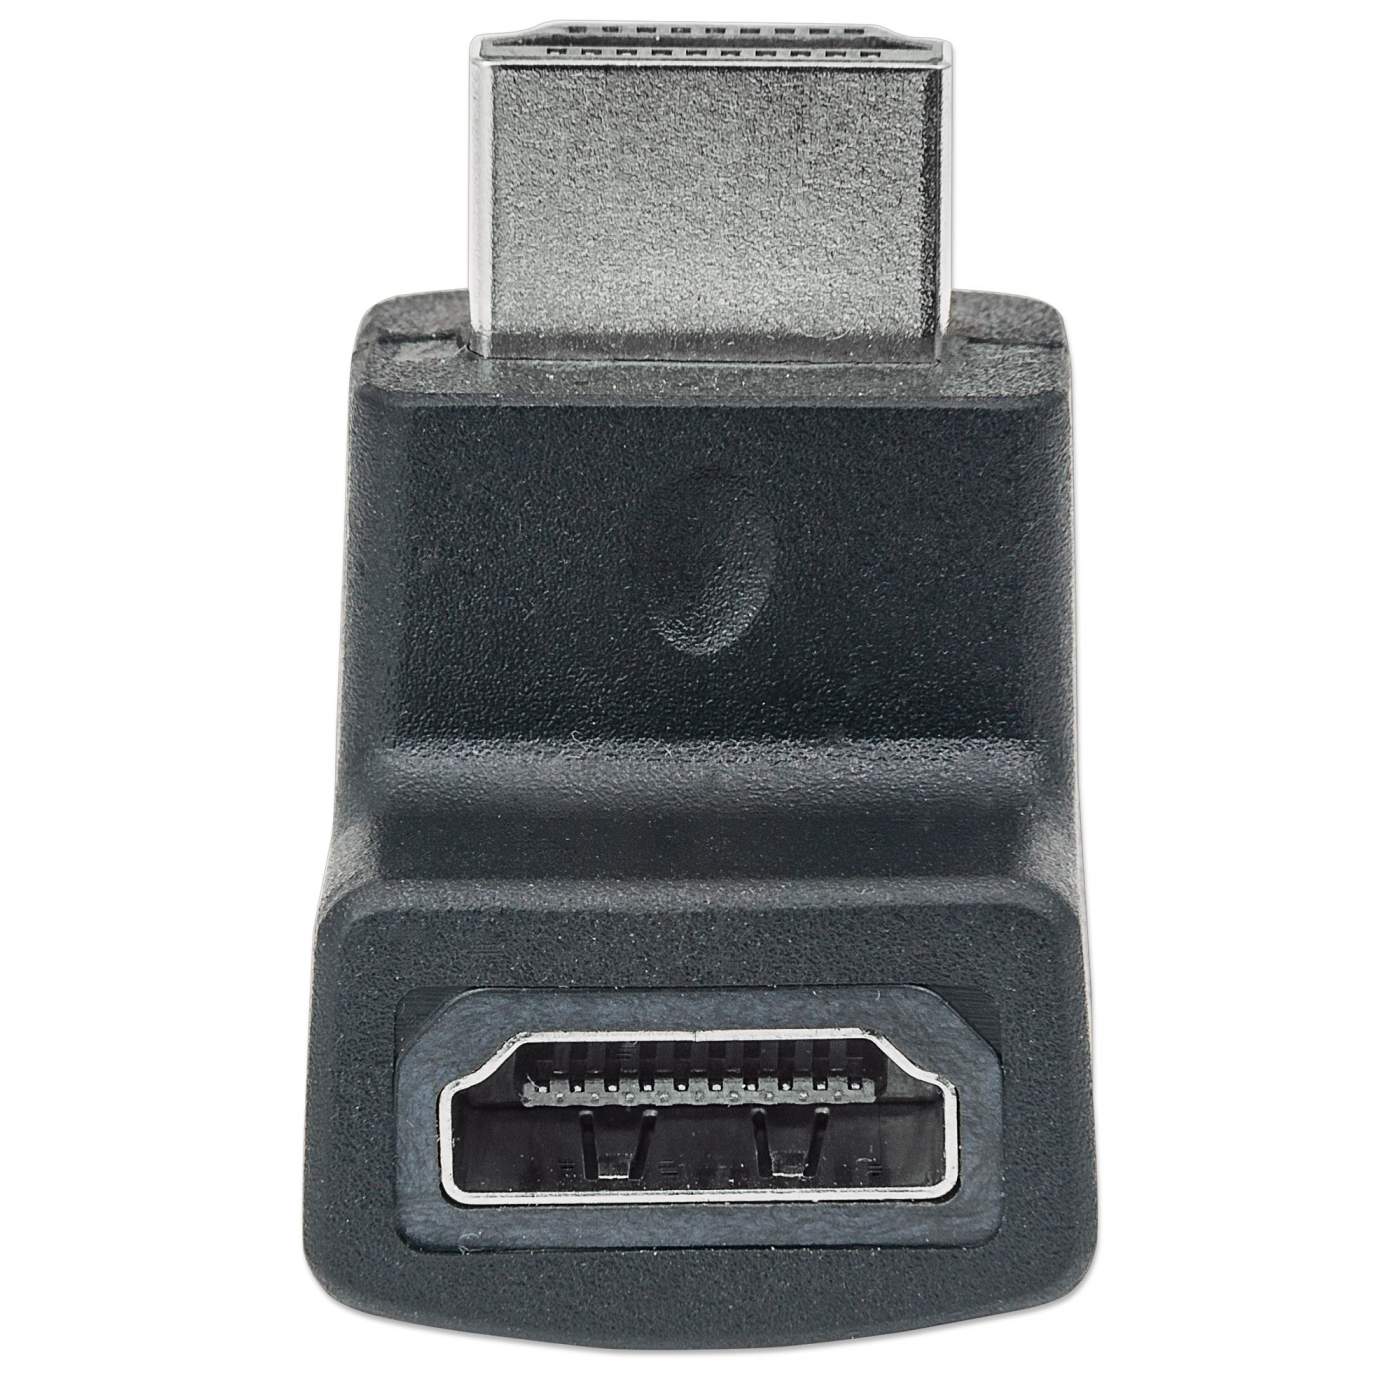 HDMI Adapter Image 7